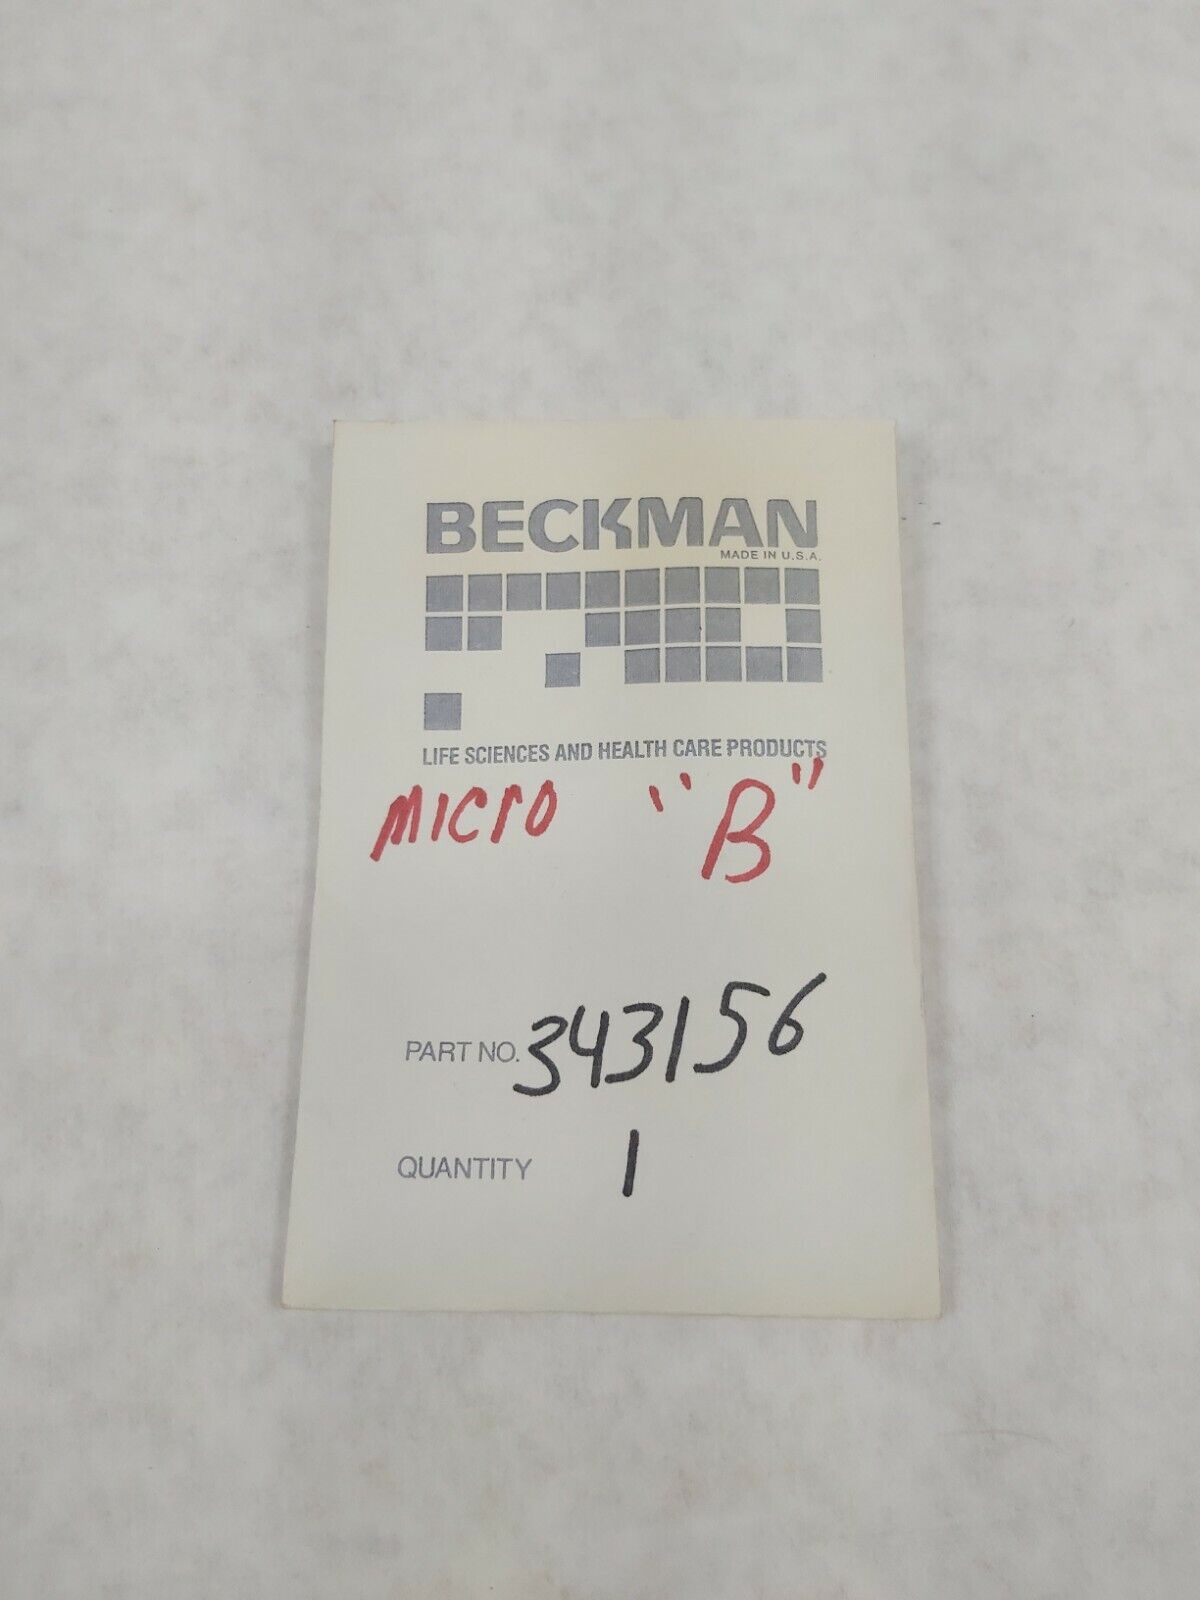 Beckman 343156 Brushes For Microfuge "B" Centrifuge